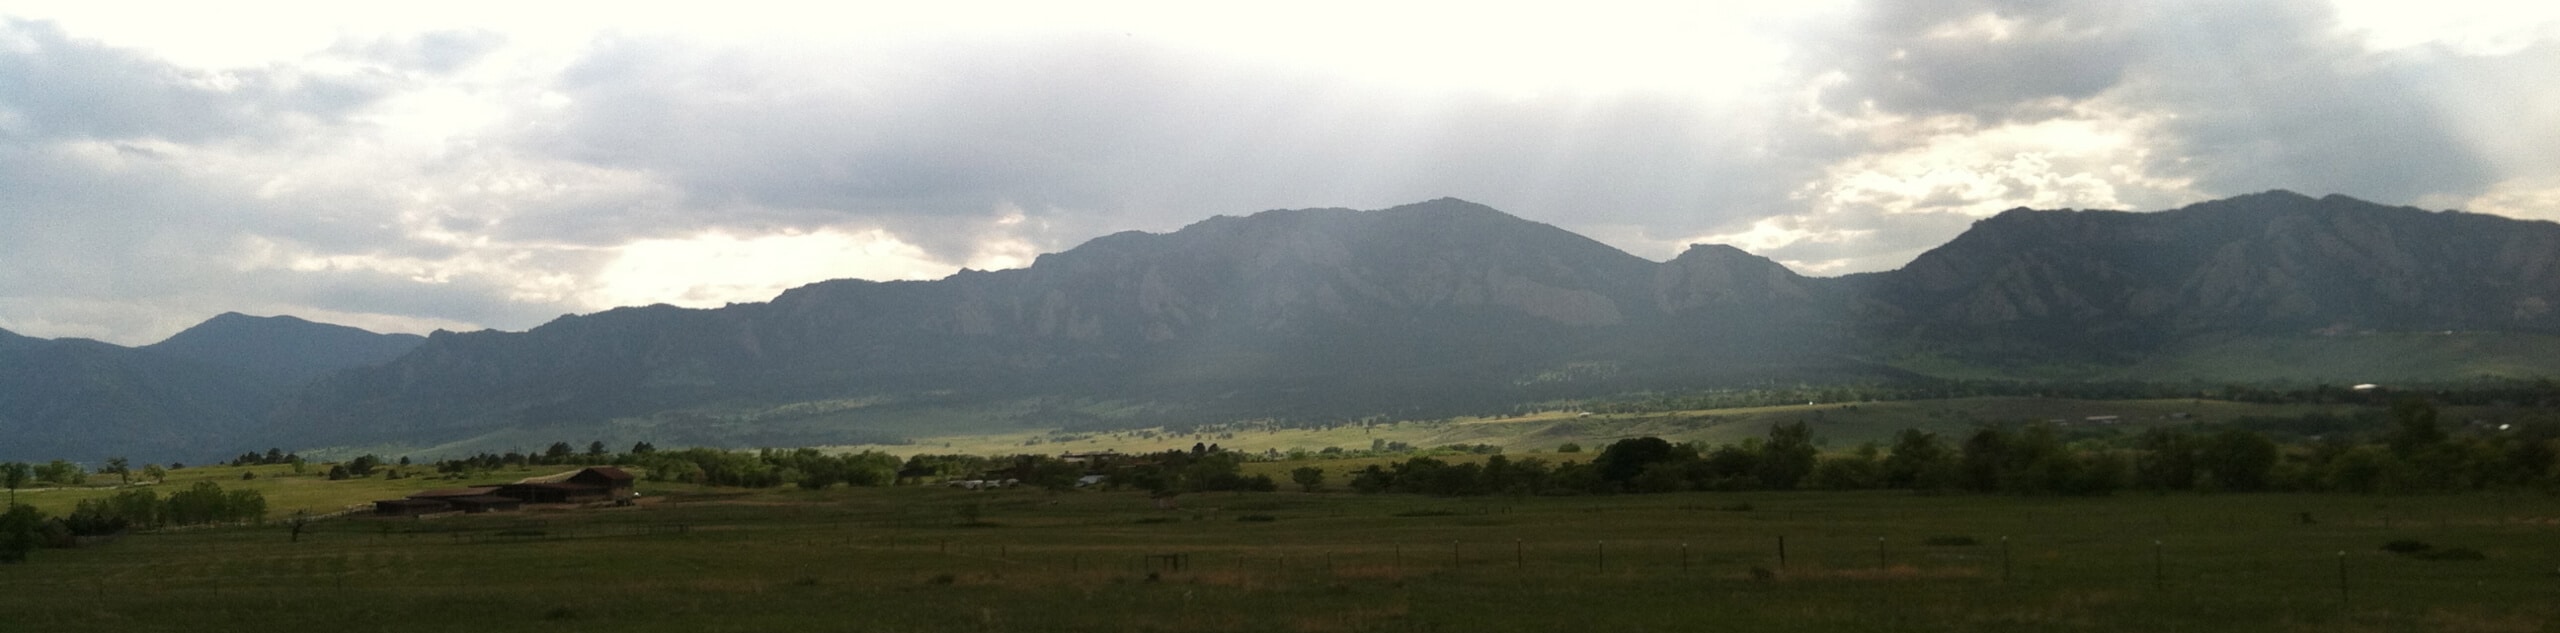 Green Mountain via Ranger Trail